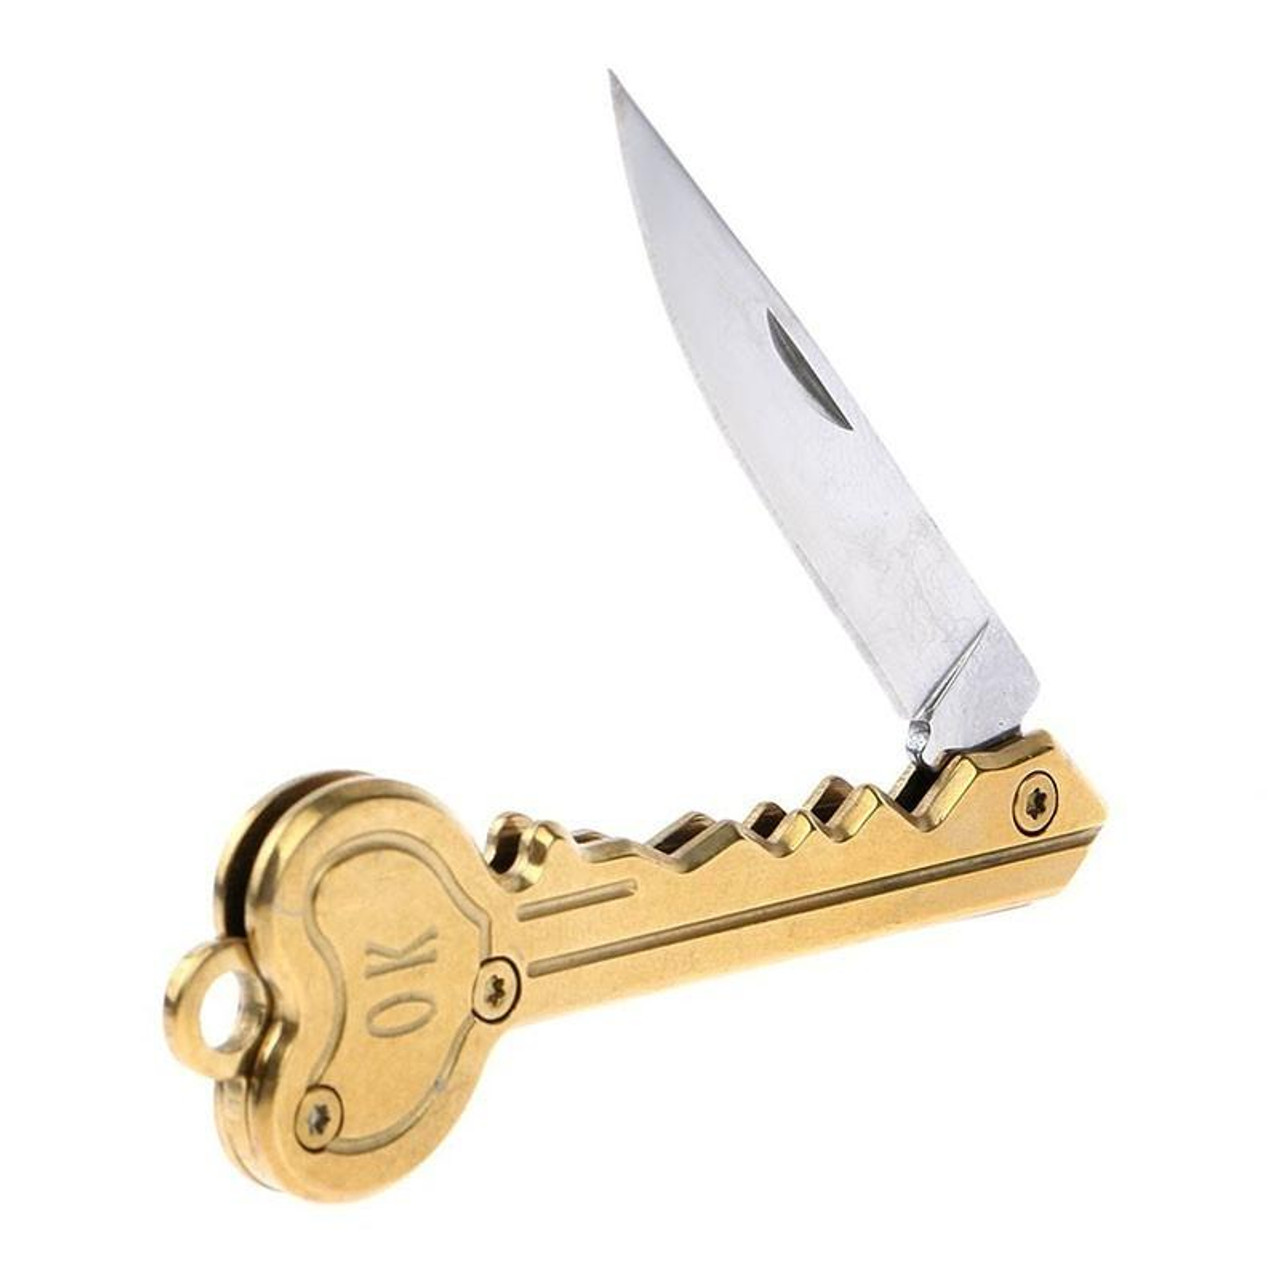 Mini Key Knife Camp Outdoor Keyring Ring Keychain Fold Self